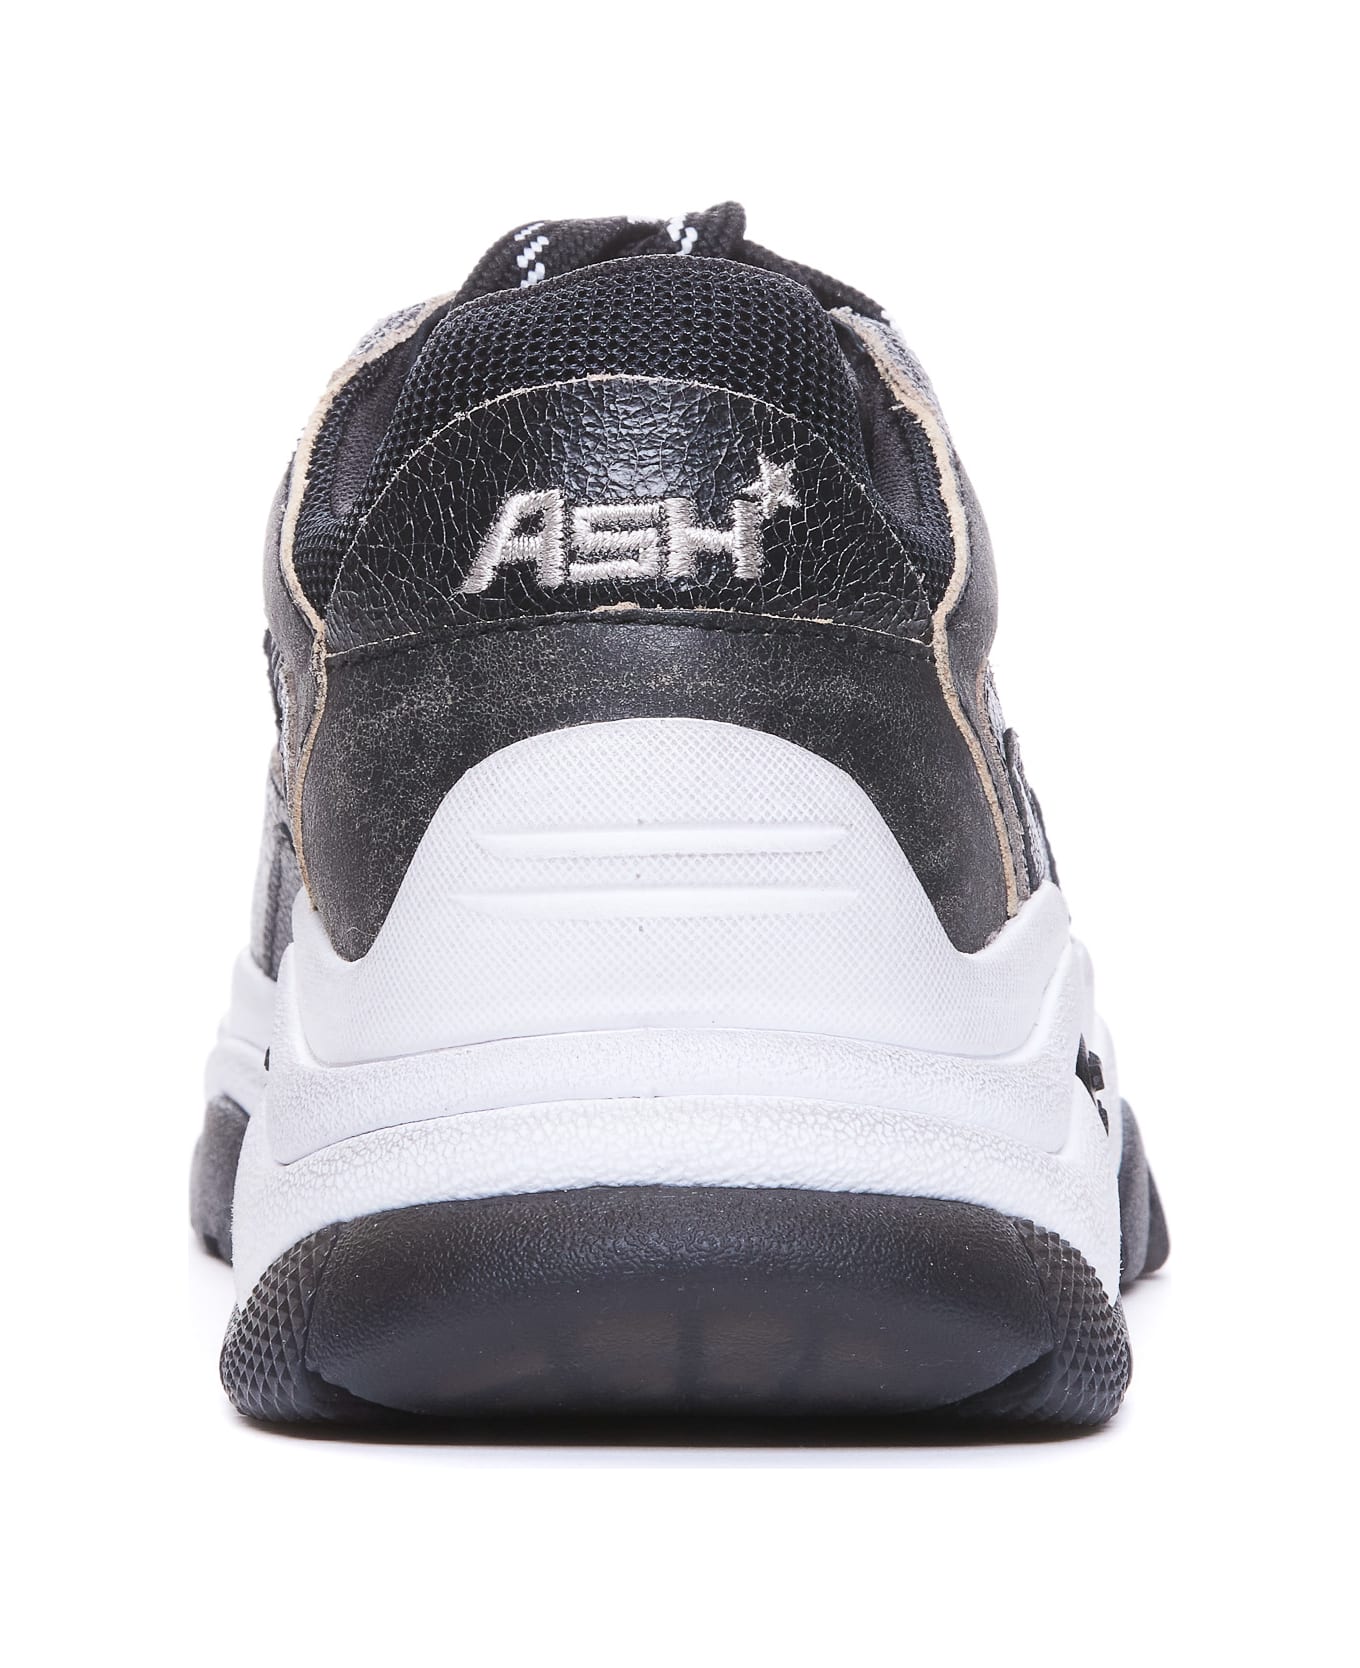 Ash Addict Sneakers - Black スニーカー